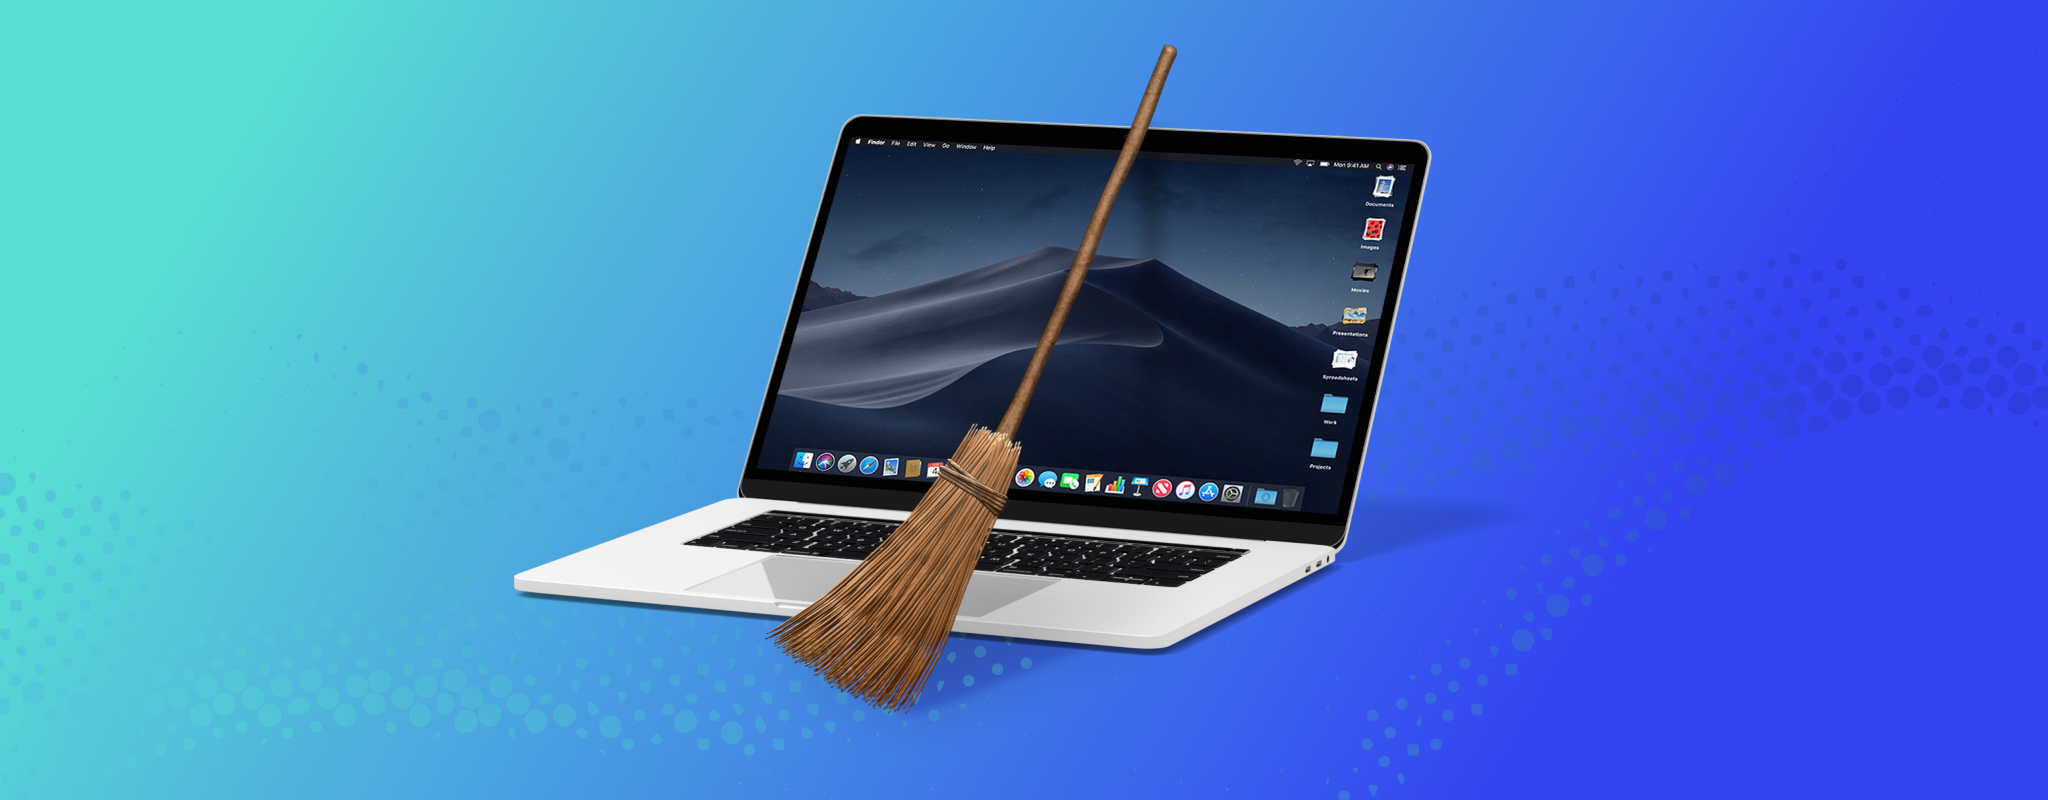 free mac memory cleaner